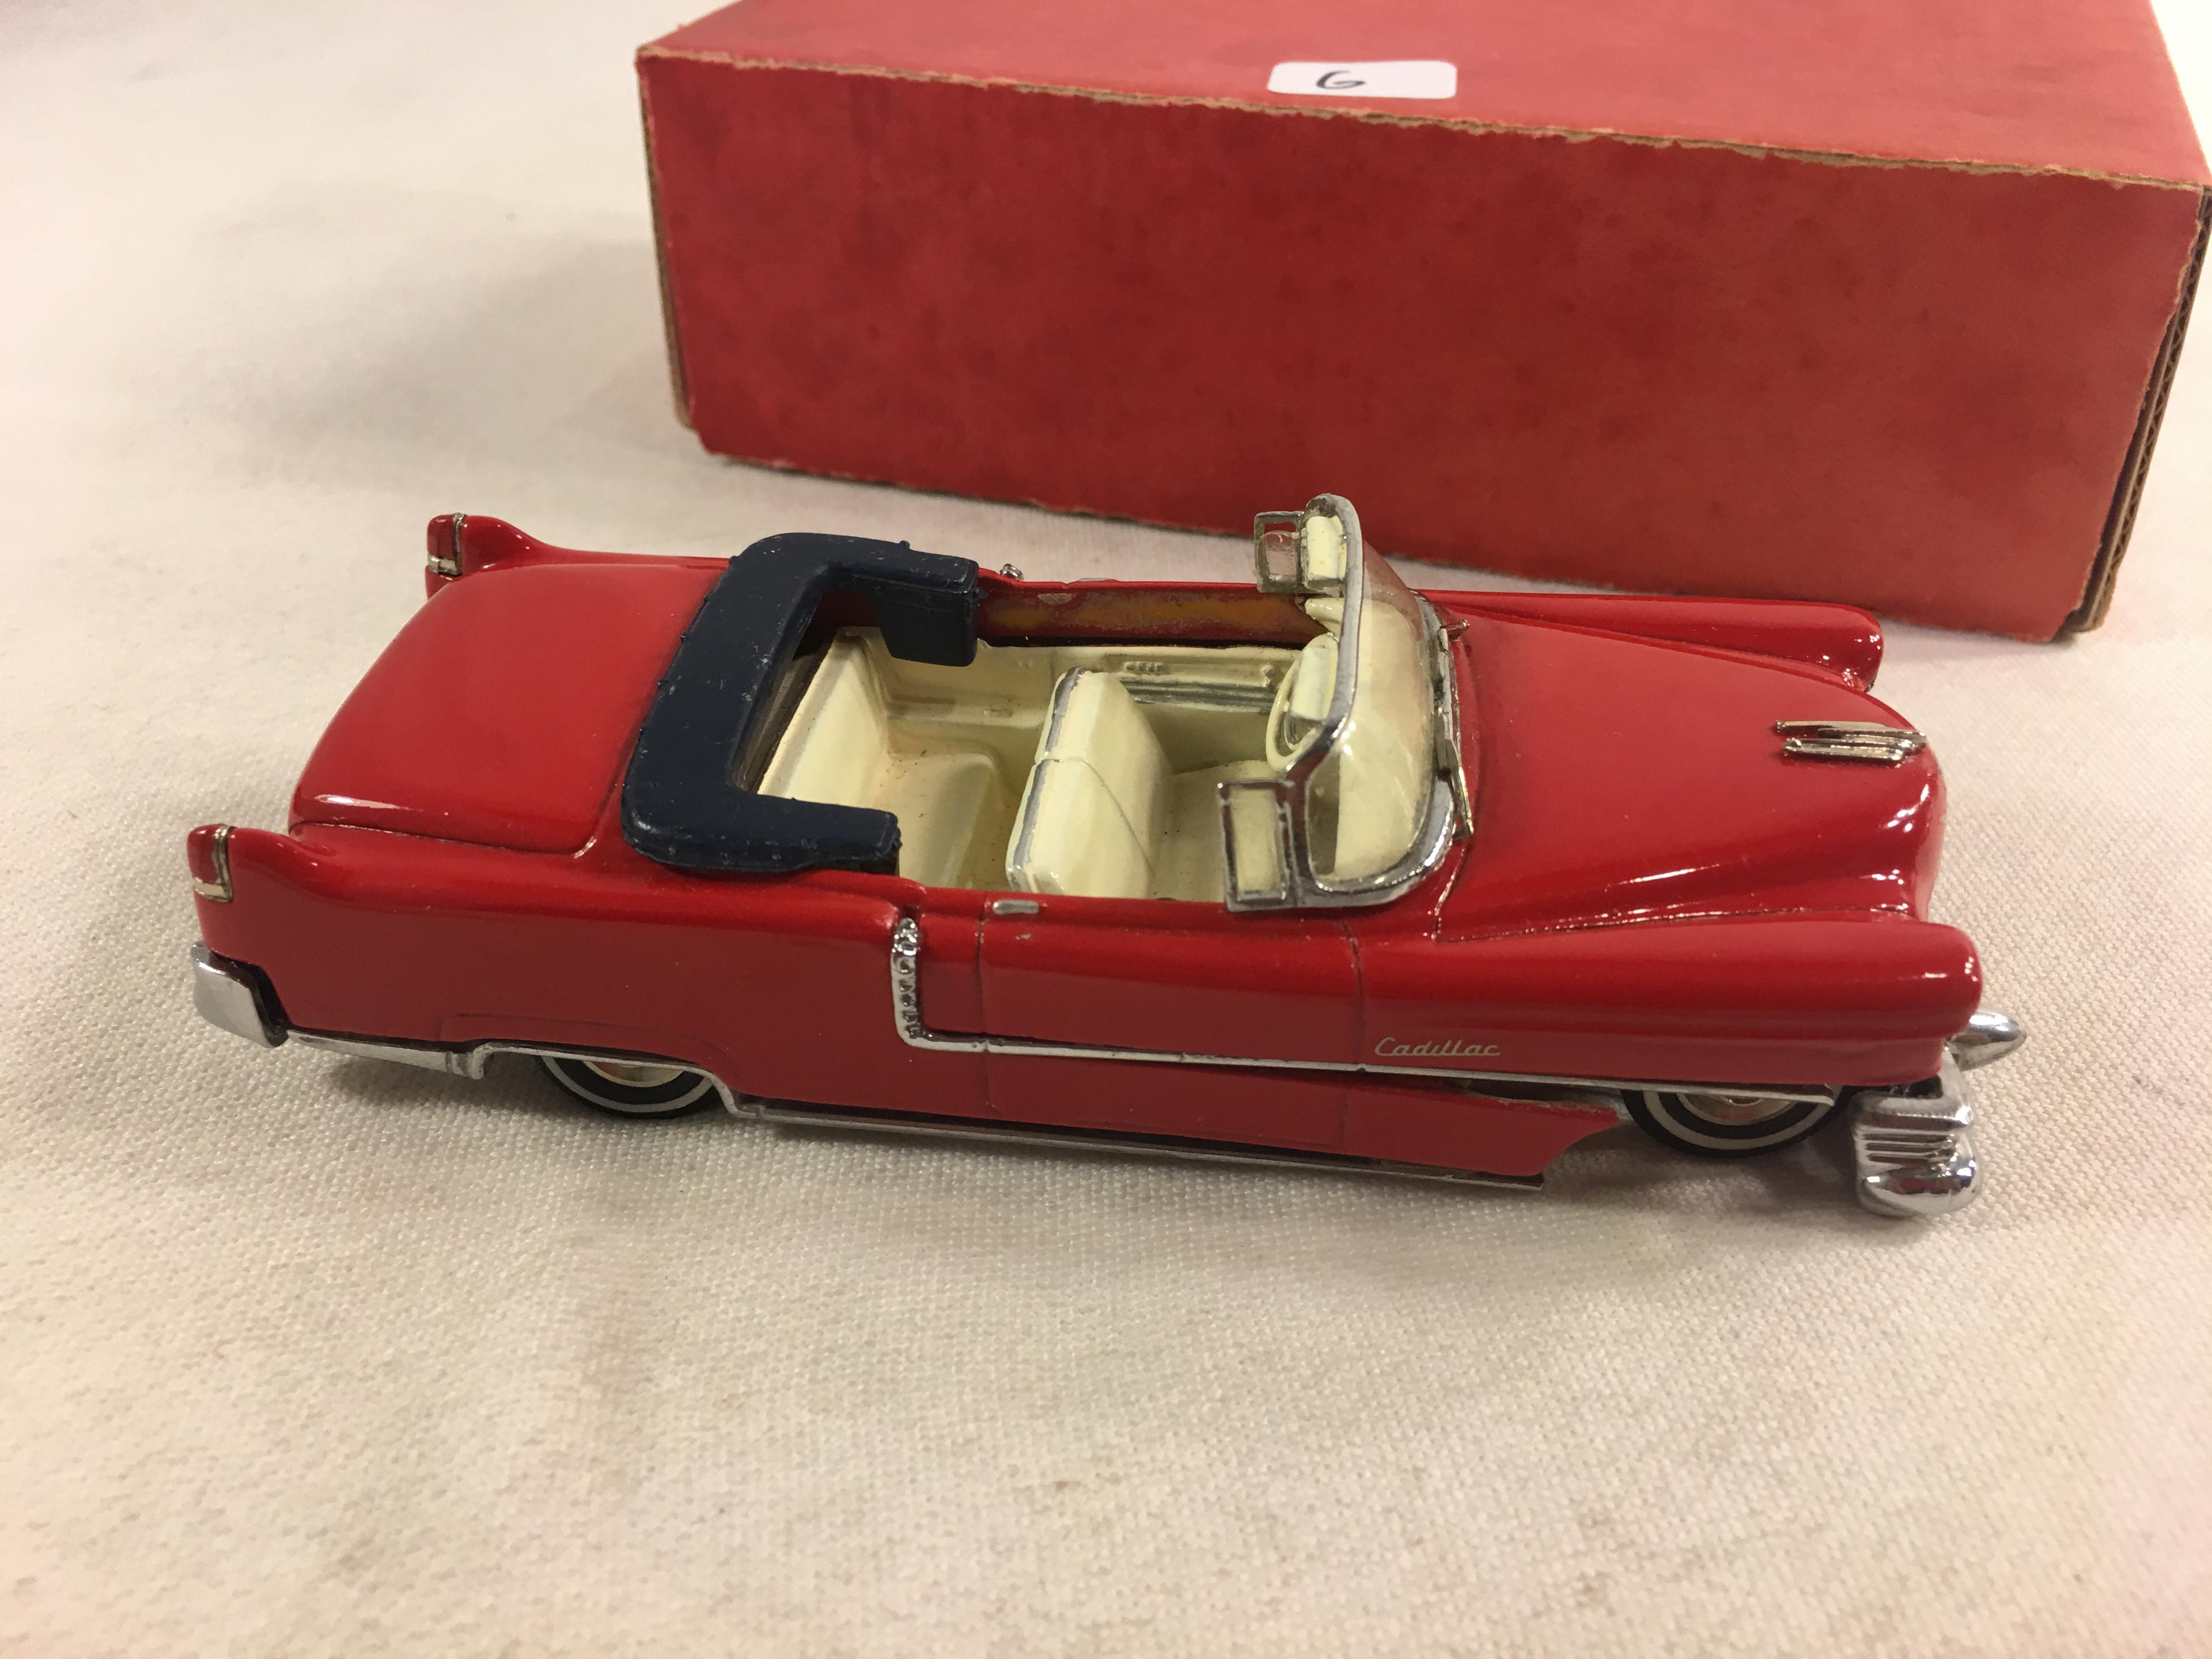 Collector Zauggs Models Empire NR 101 Series Empire Kit Cadillac Convertibel Series -62-1955- Scale